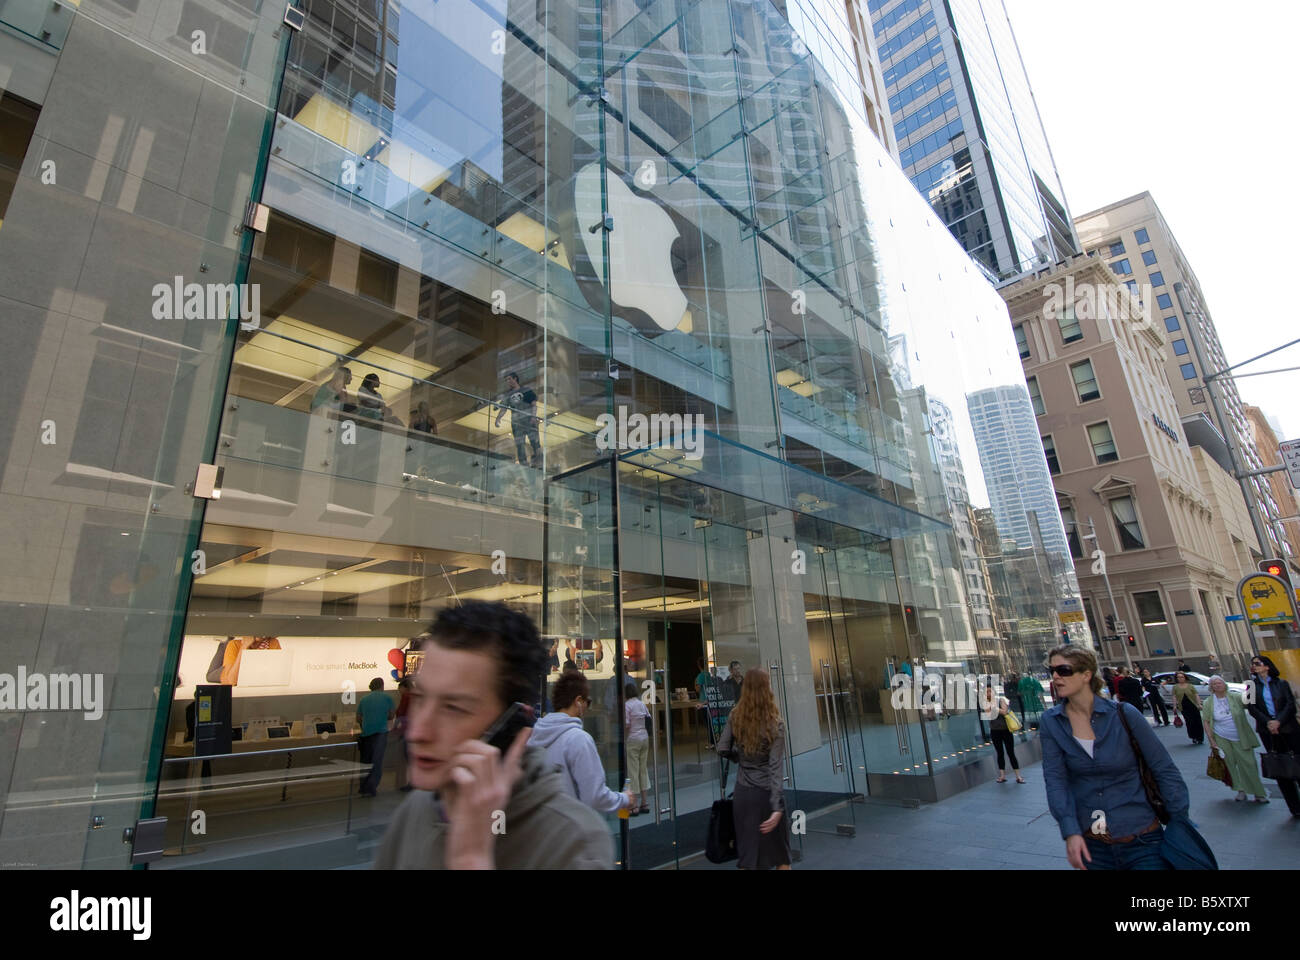 Apple store in George street in Sydney, Australia, opened its doors in June 2008. Stock Photo